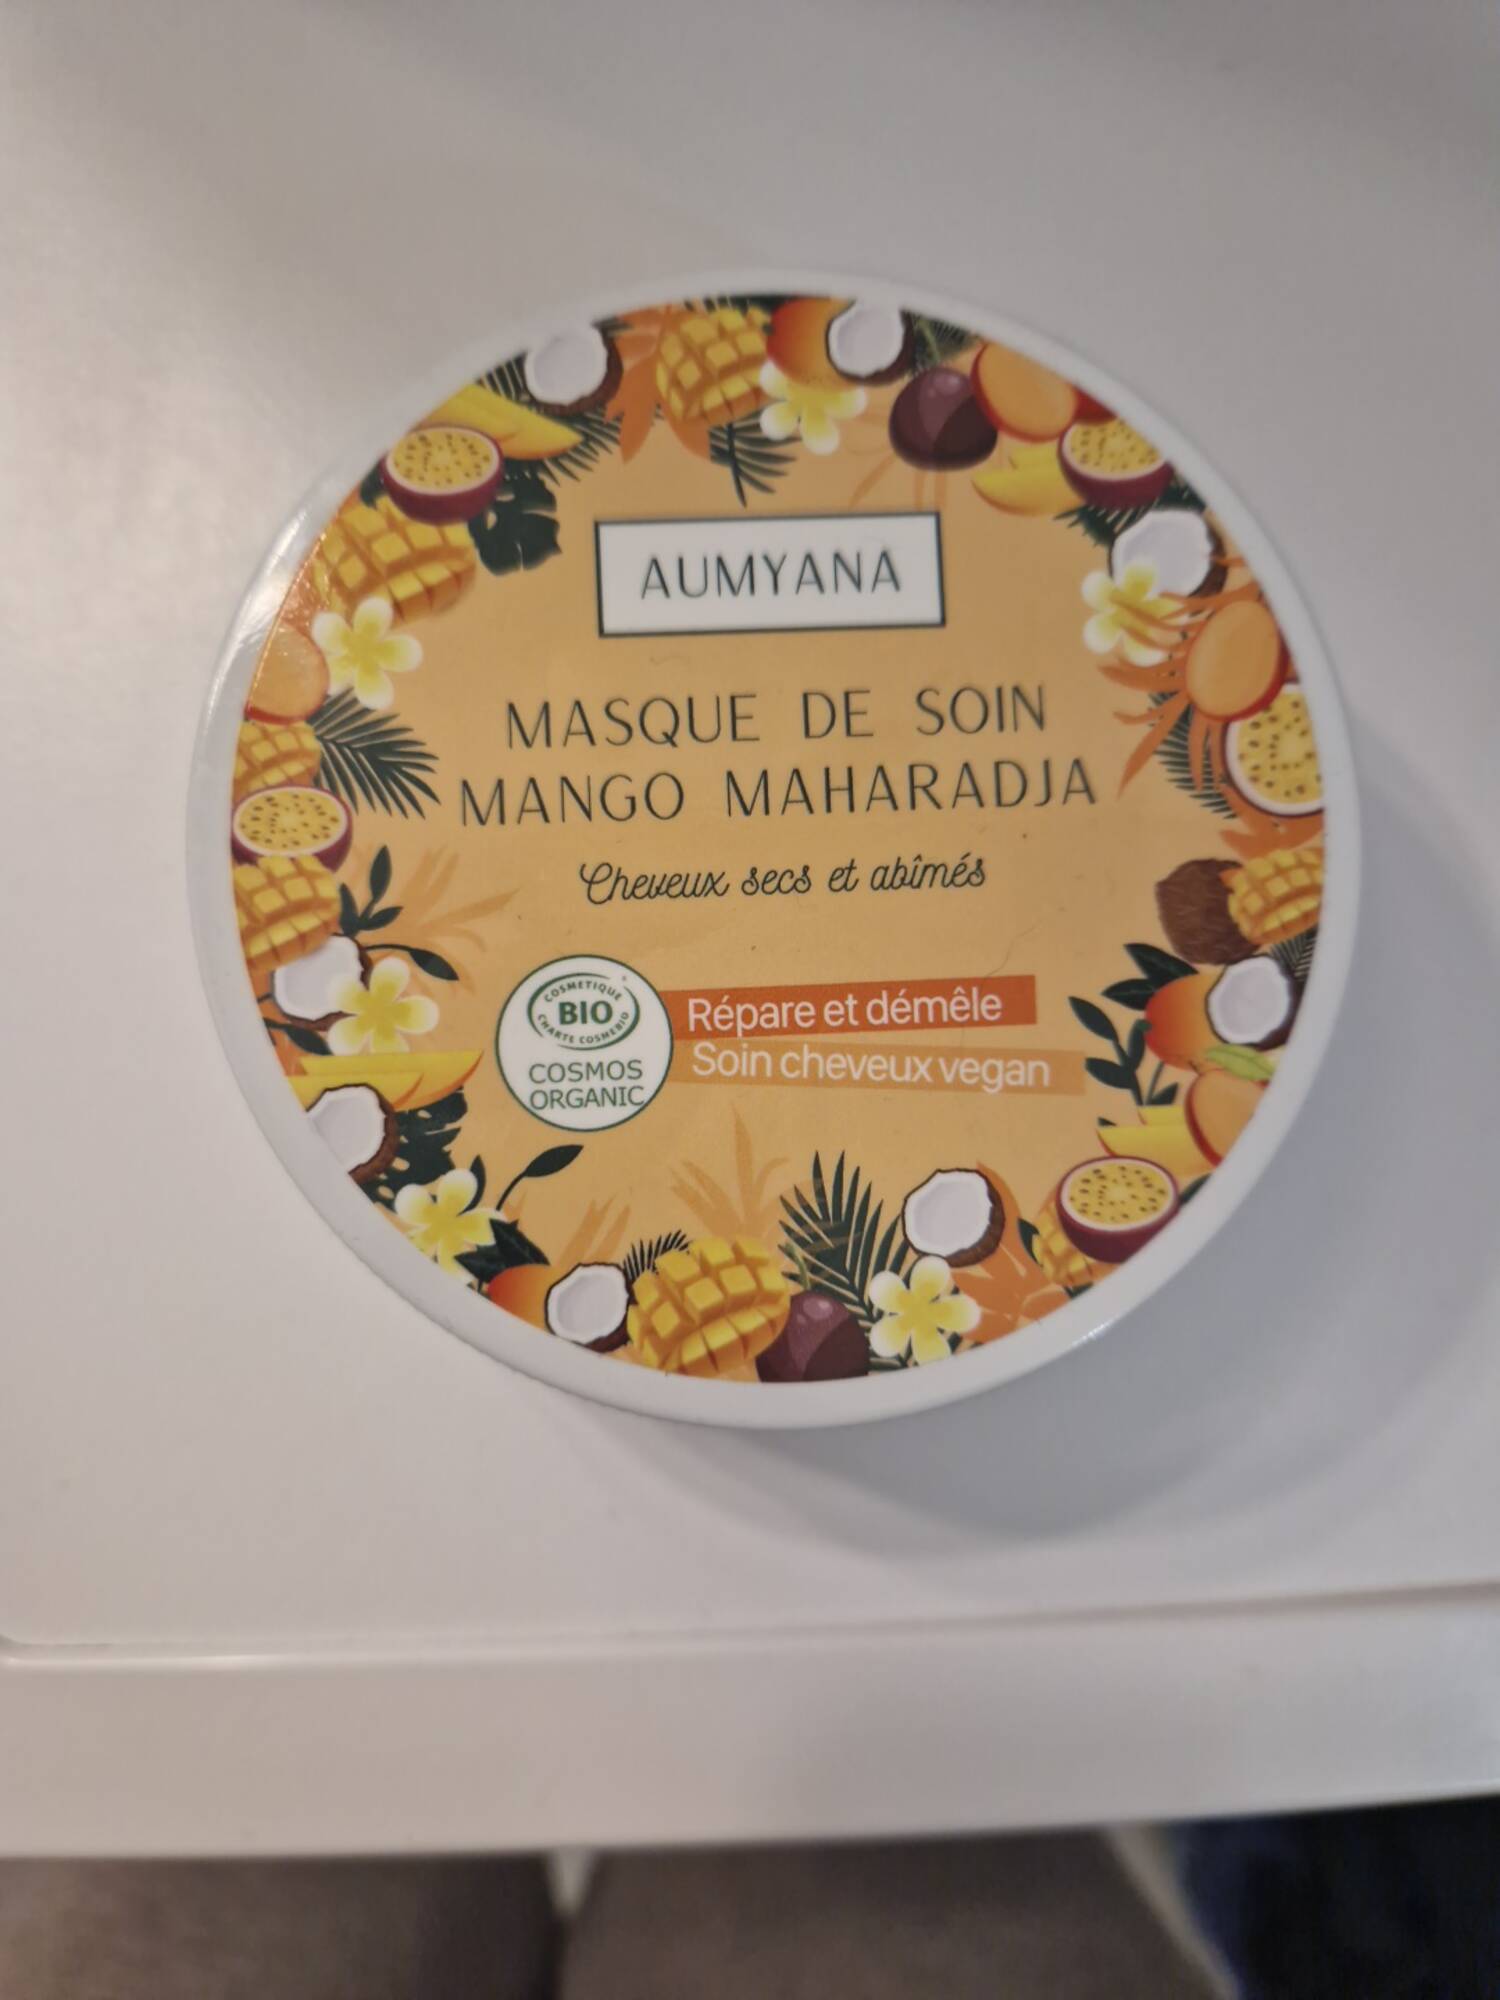 AUMYANA - Masque de soin mango maharadja